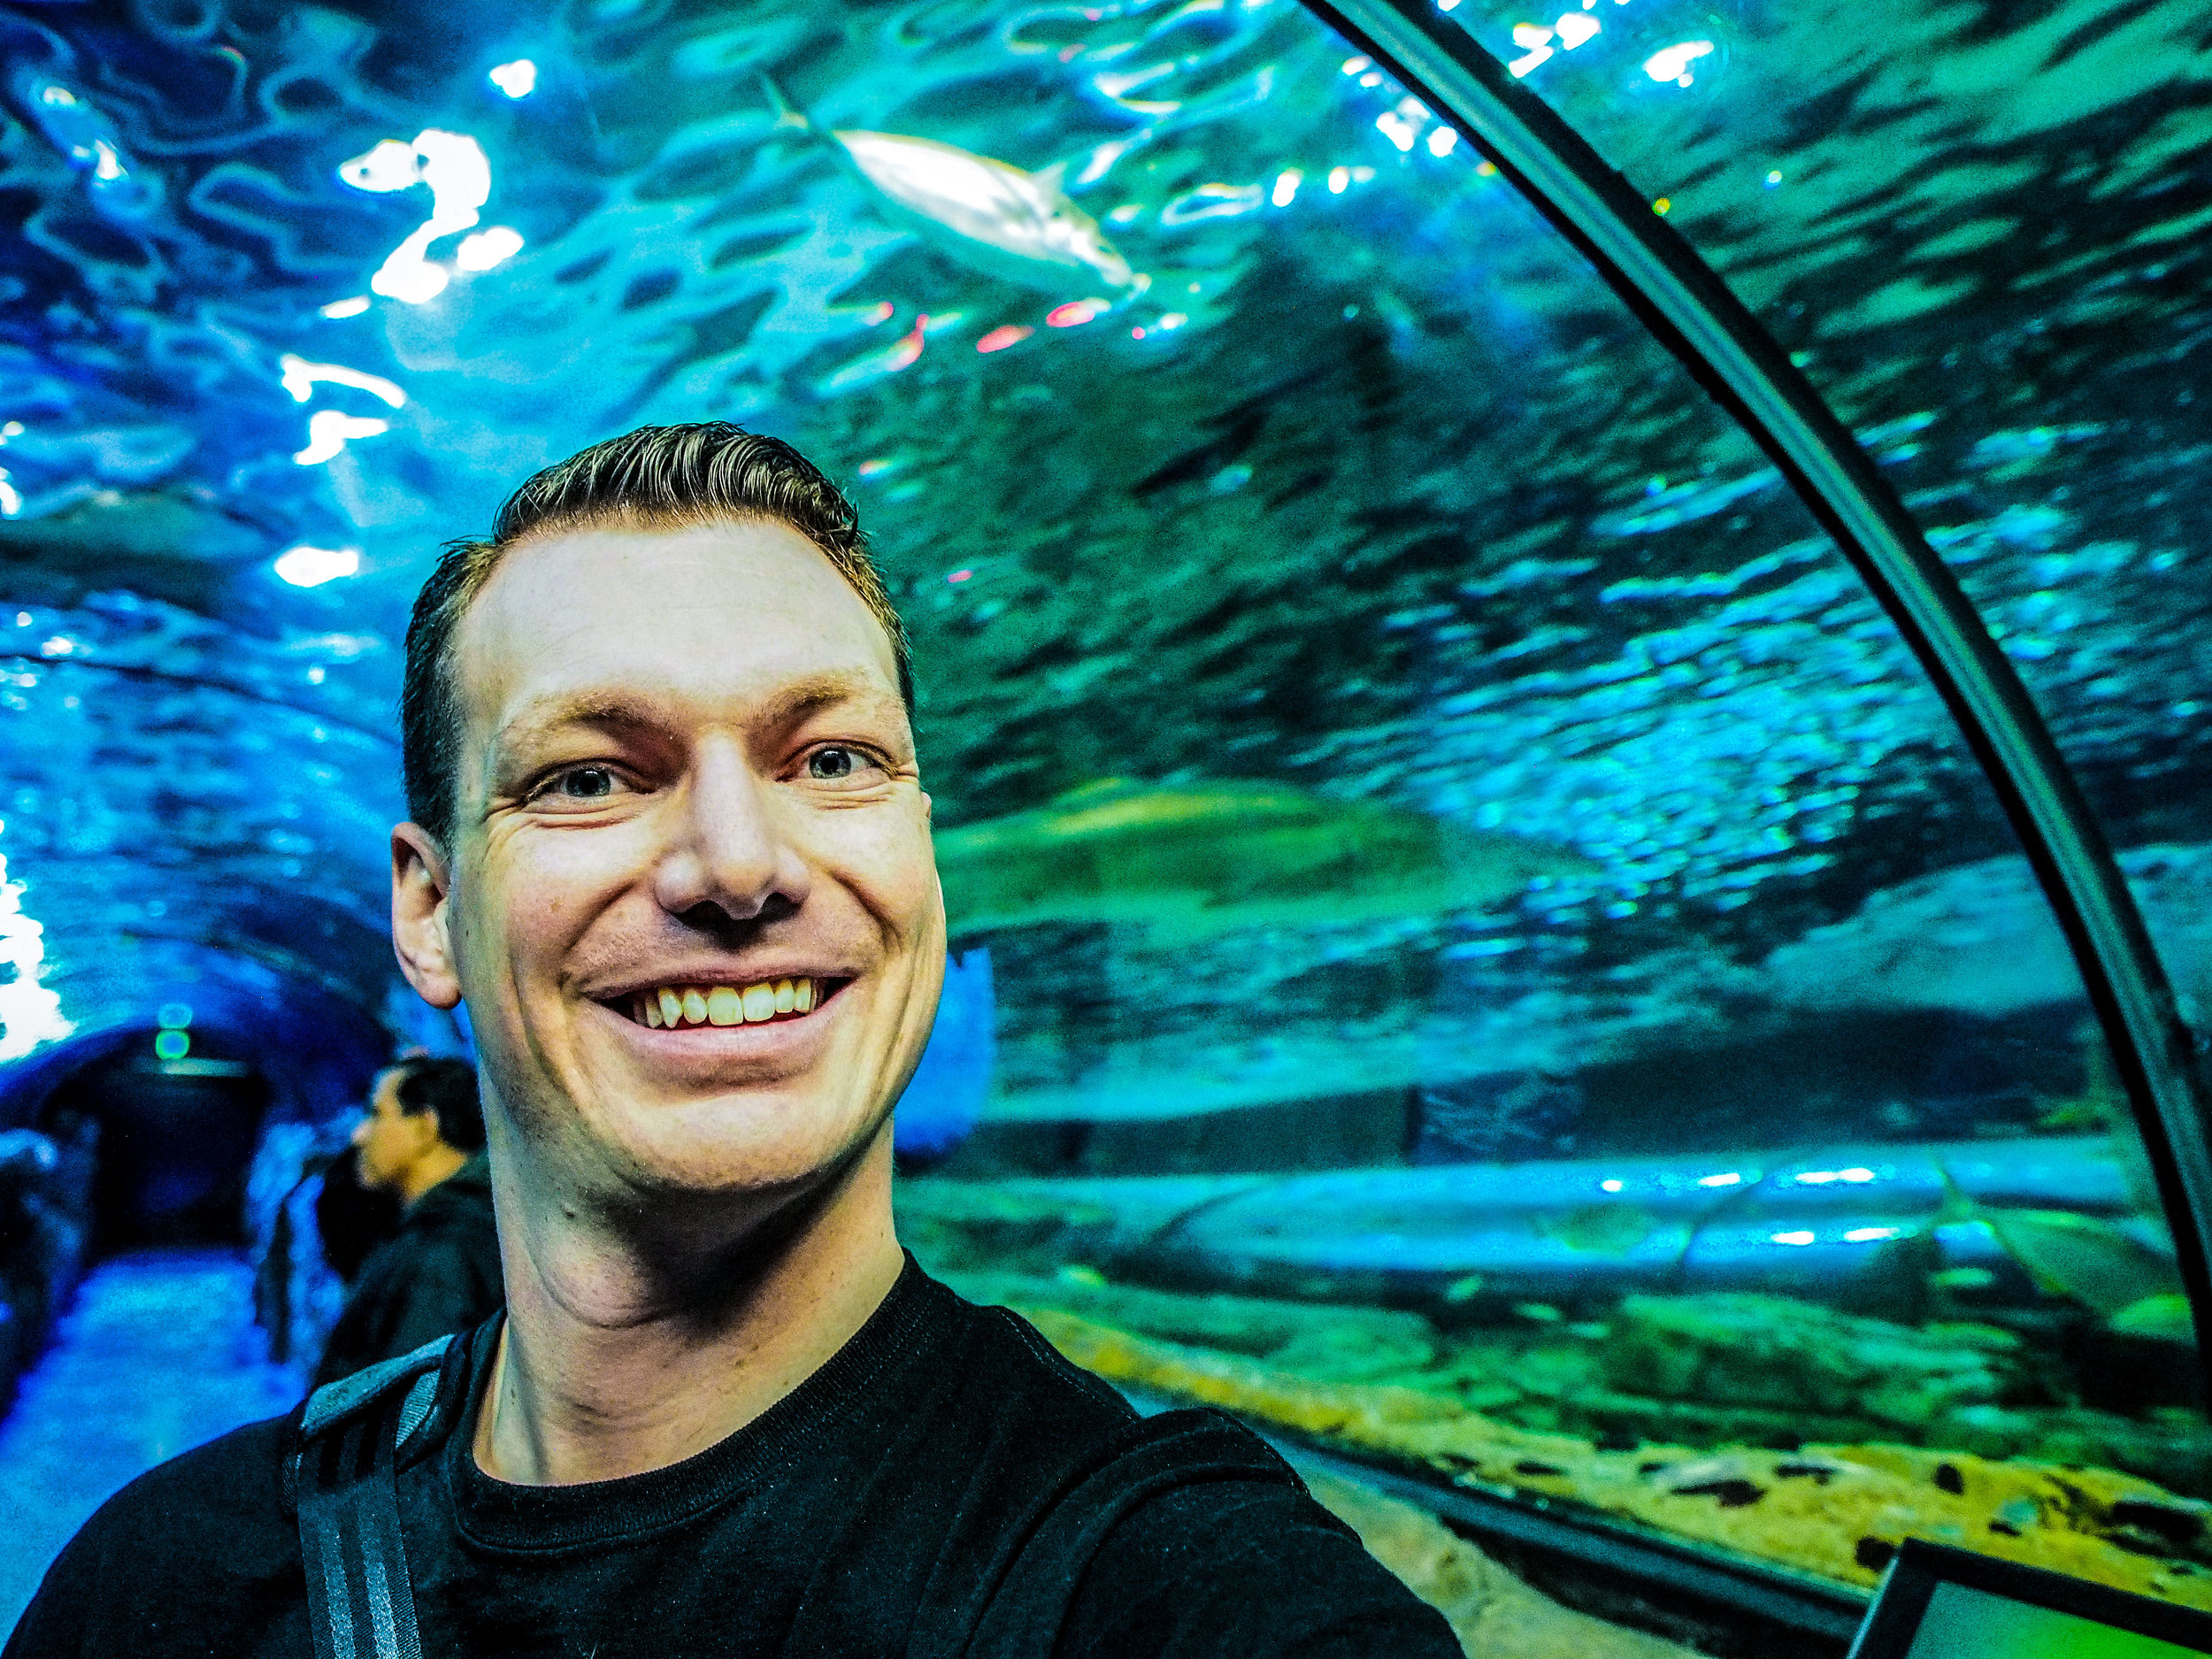 Shark Selfie